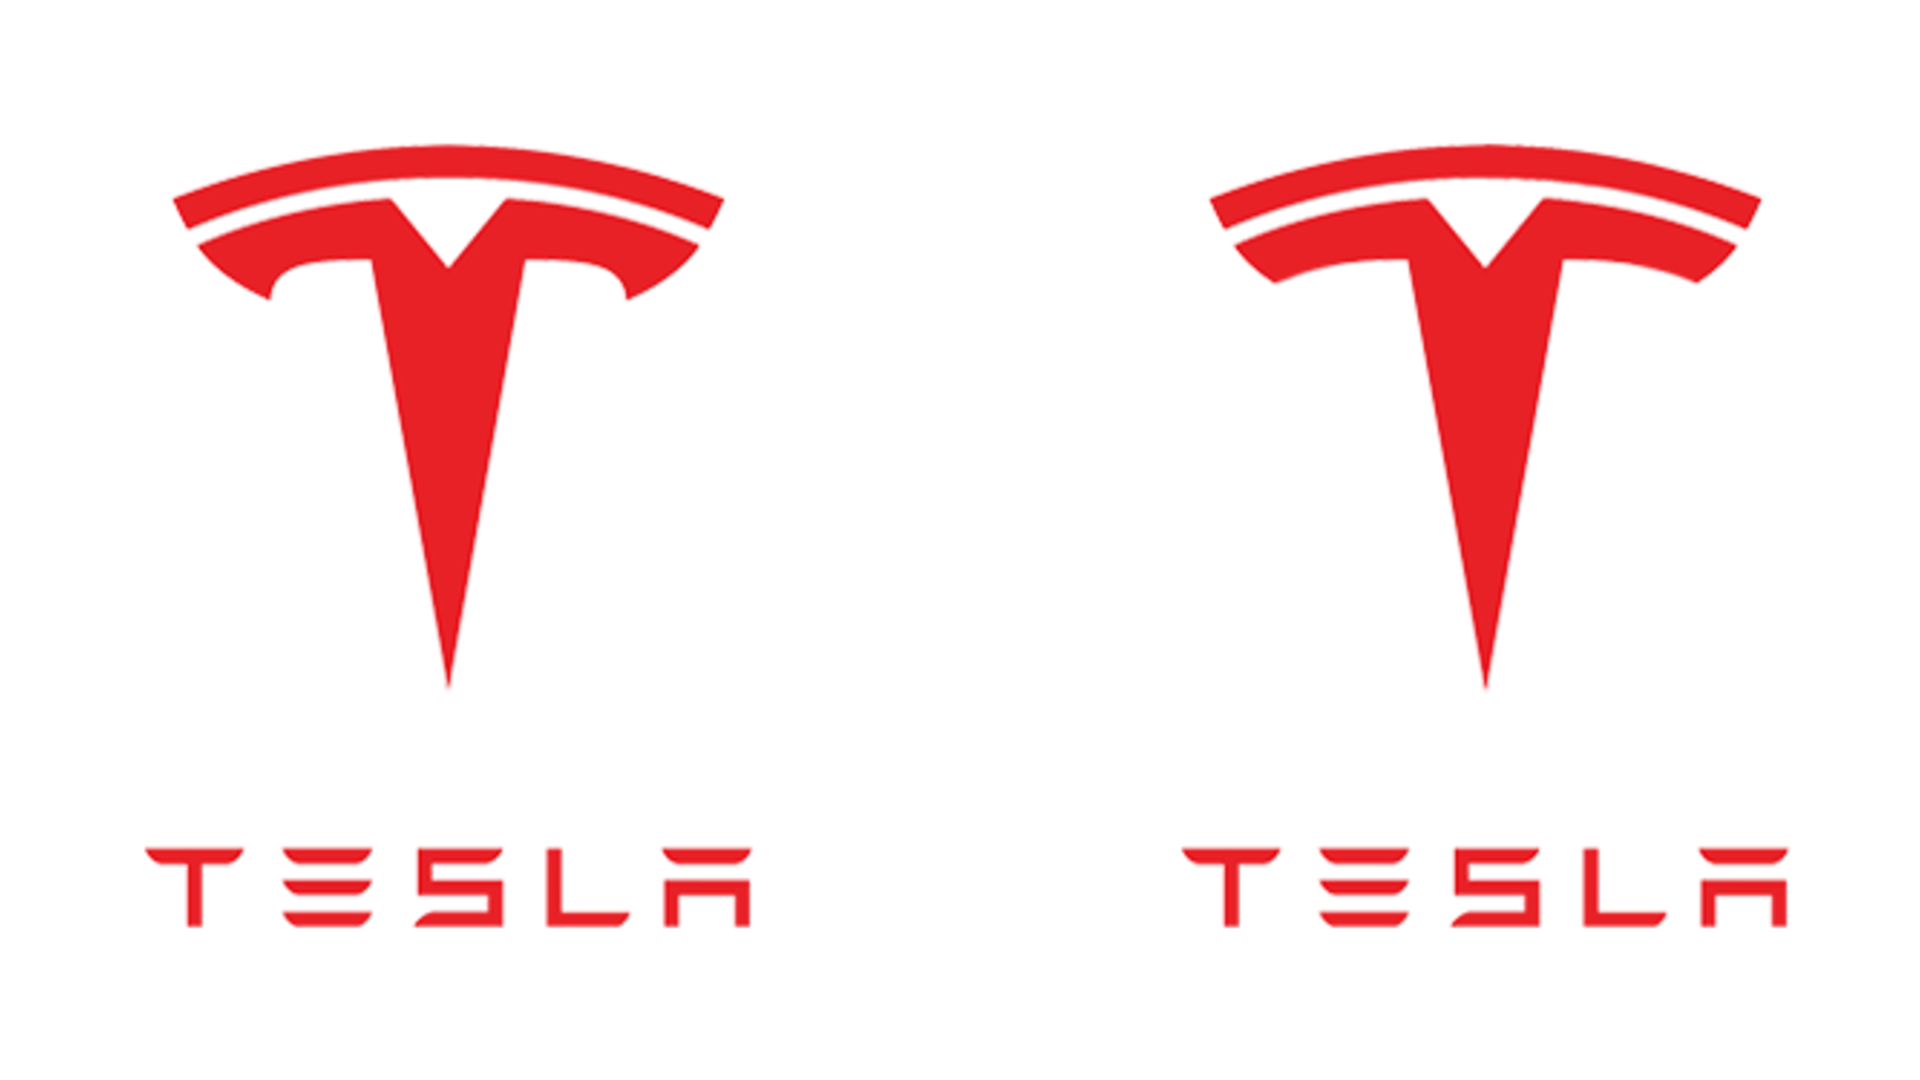 Tesla badge